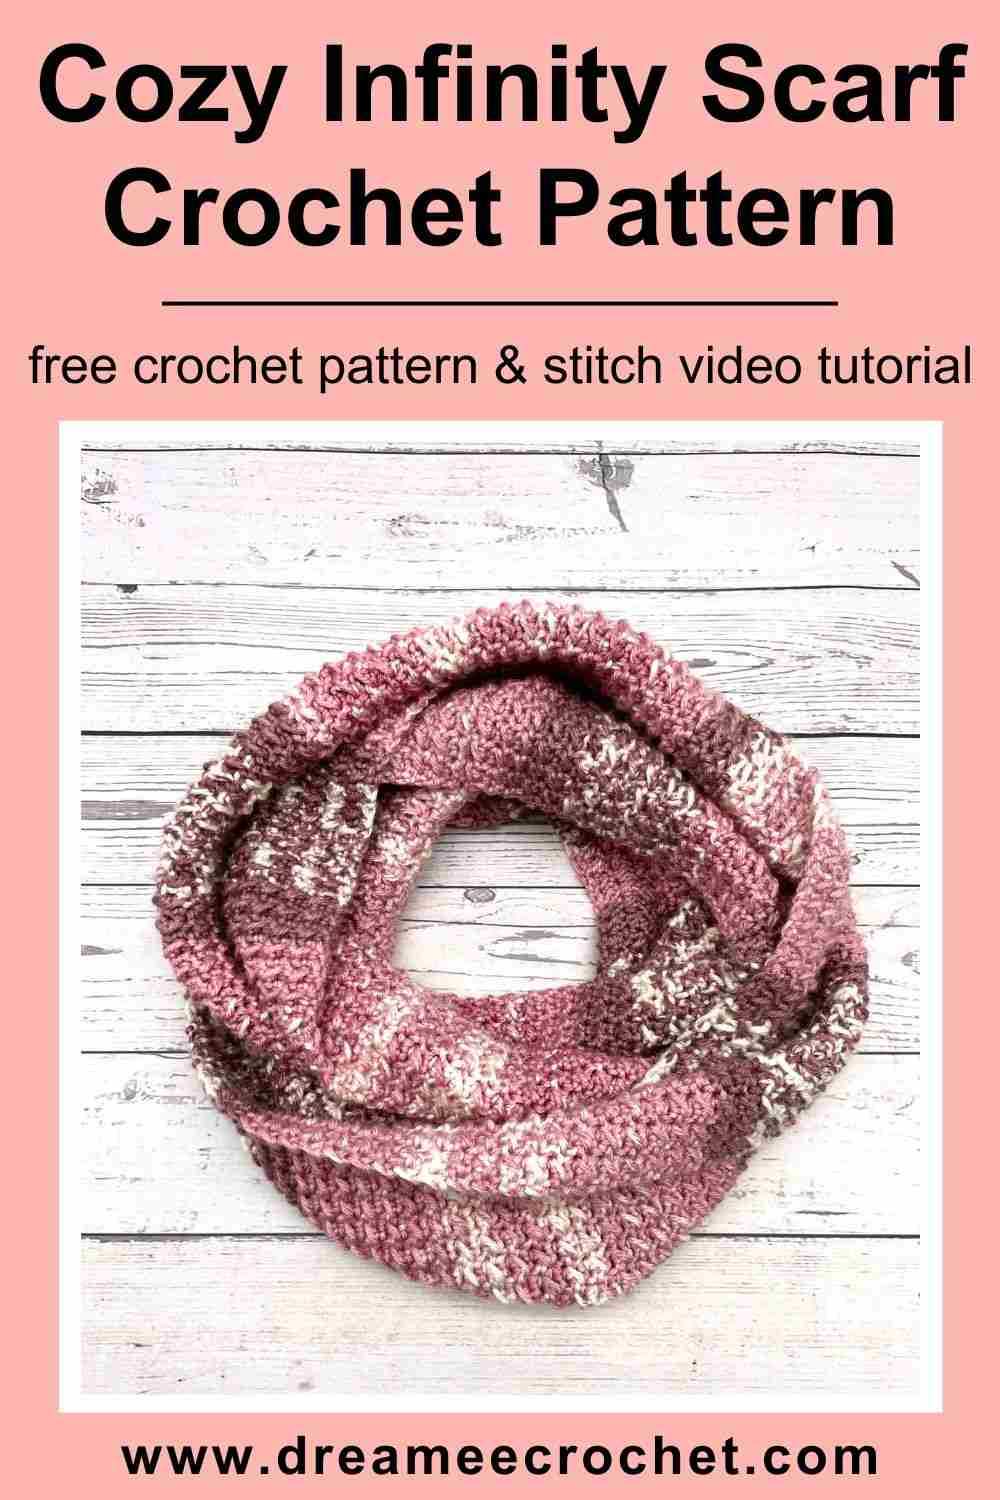 Free Infinity Scarf Crochet Pattern, Even Moss Stitch Scarf Pattern (9)